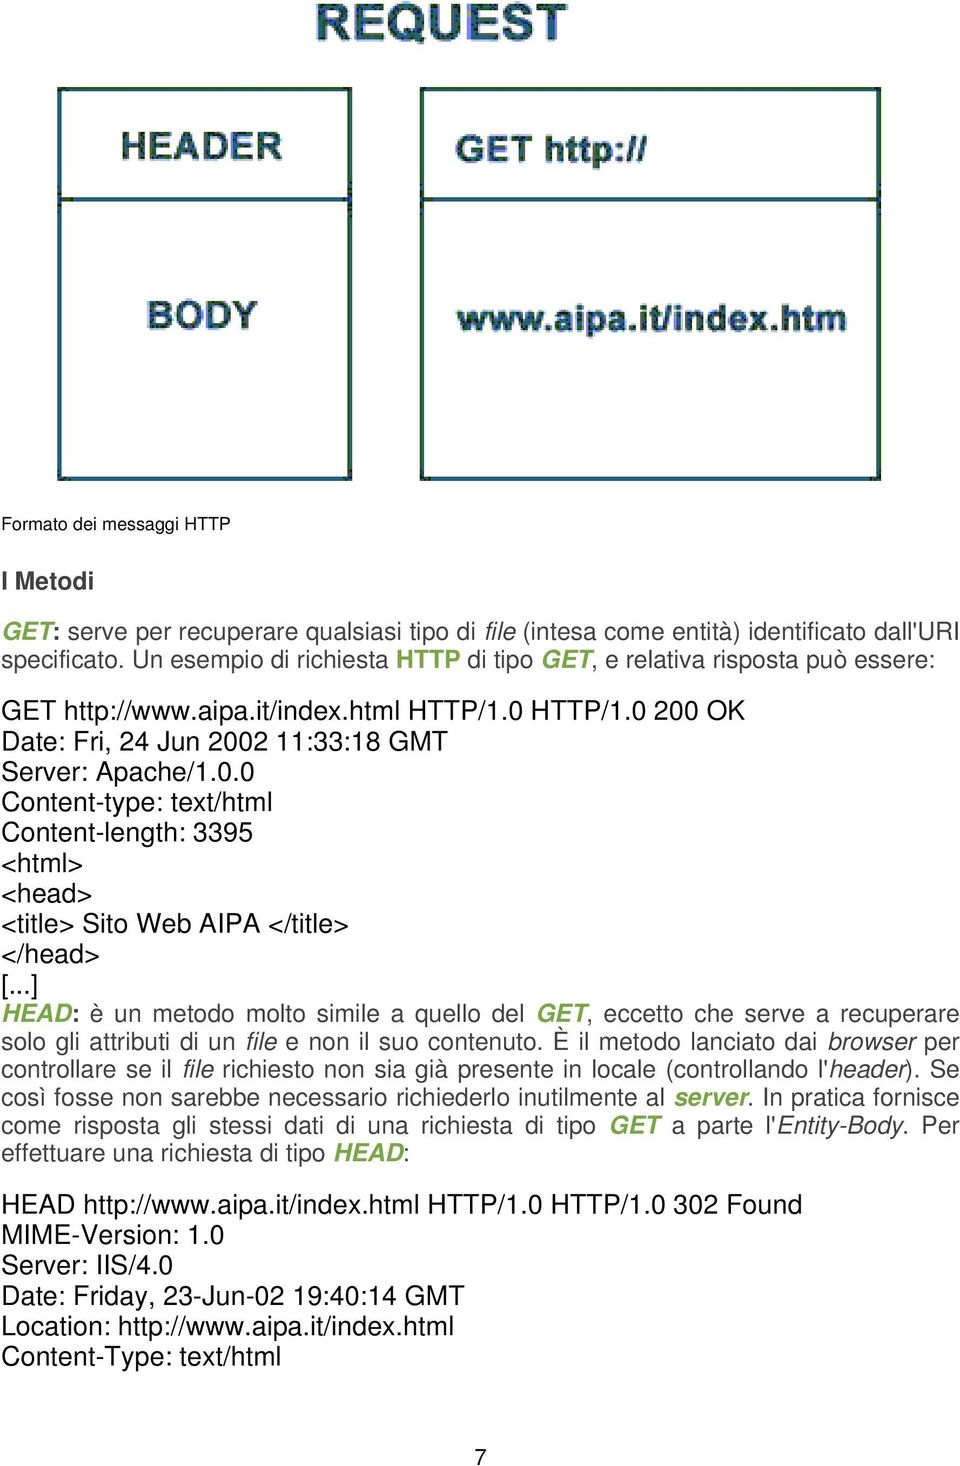 HTTP/1.0 200 OK Date: Fri, 24 Jun 2002 11:33:18 GMT Server: Apache/1.0.0 Content-type: text/html Content-length: 3395 <html> <head> <title> Sito Web AIPA </title> </head> [.